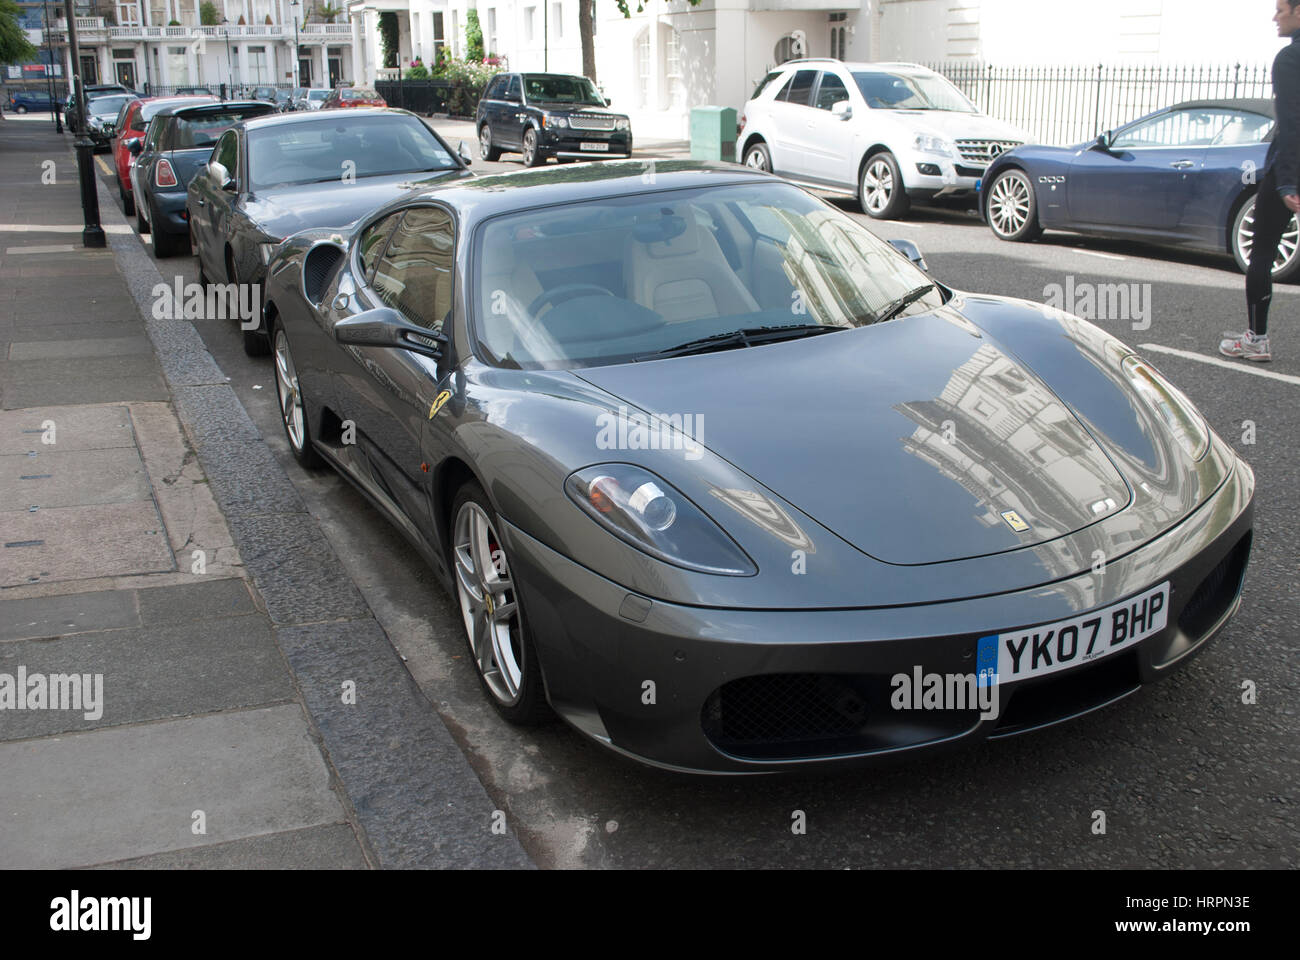 Grigio Ingrid (Grey) Ferrari F430 sports car parked on a street in London Stock Photo